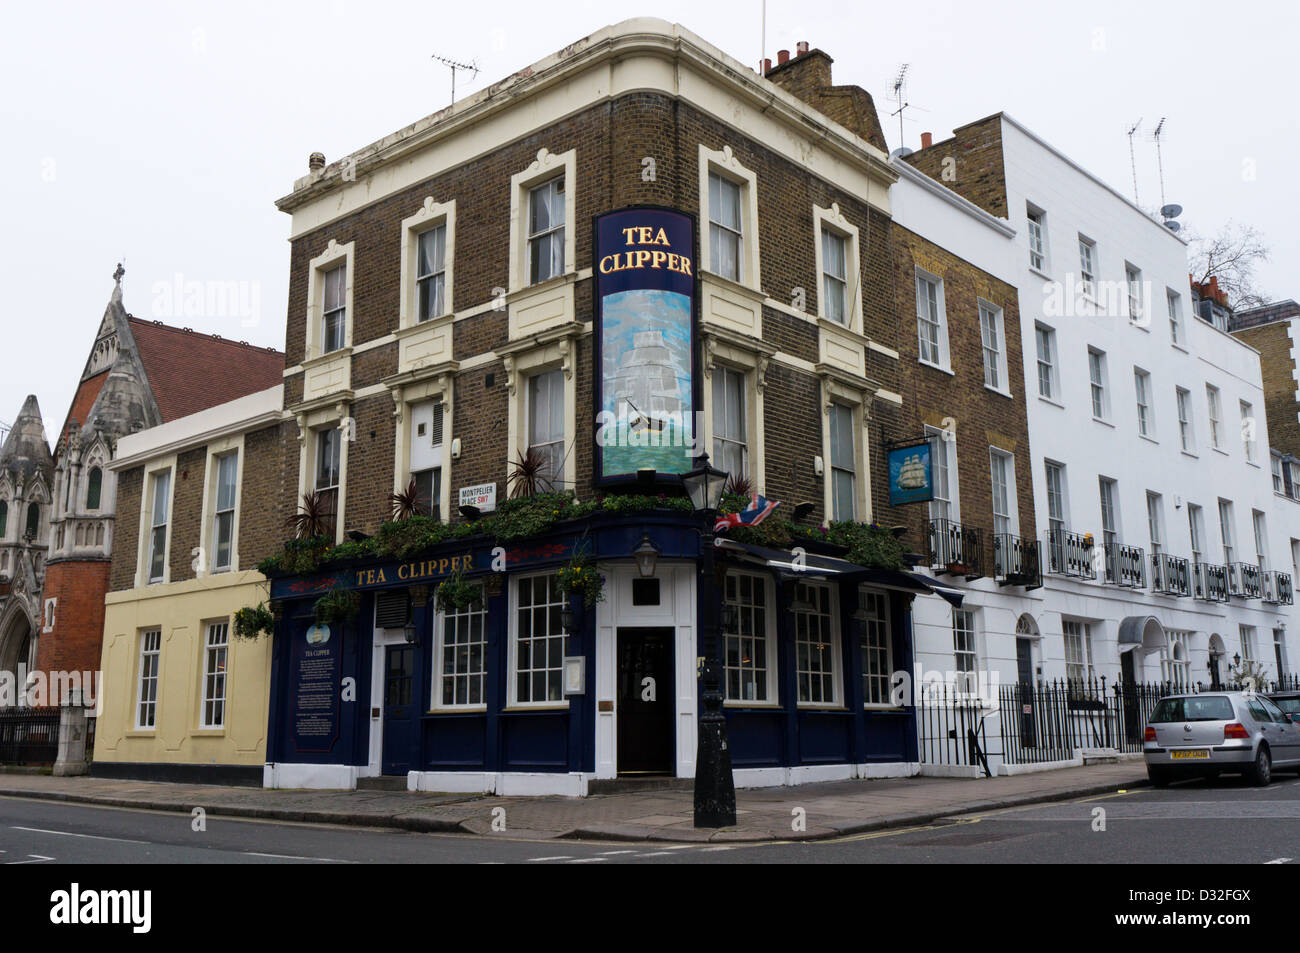 The Tea Clipper public house on the corner of Montpelier Street in Knightsbridge, London. Stock Photo